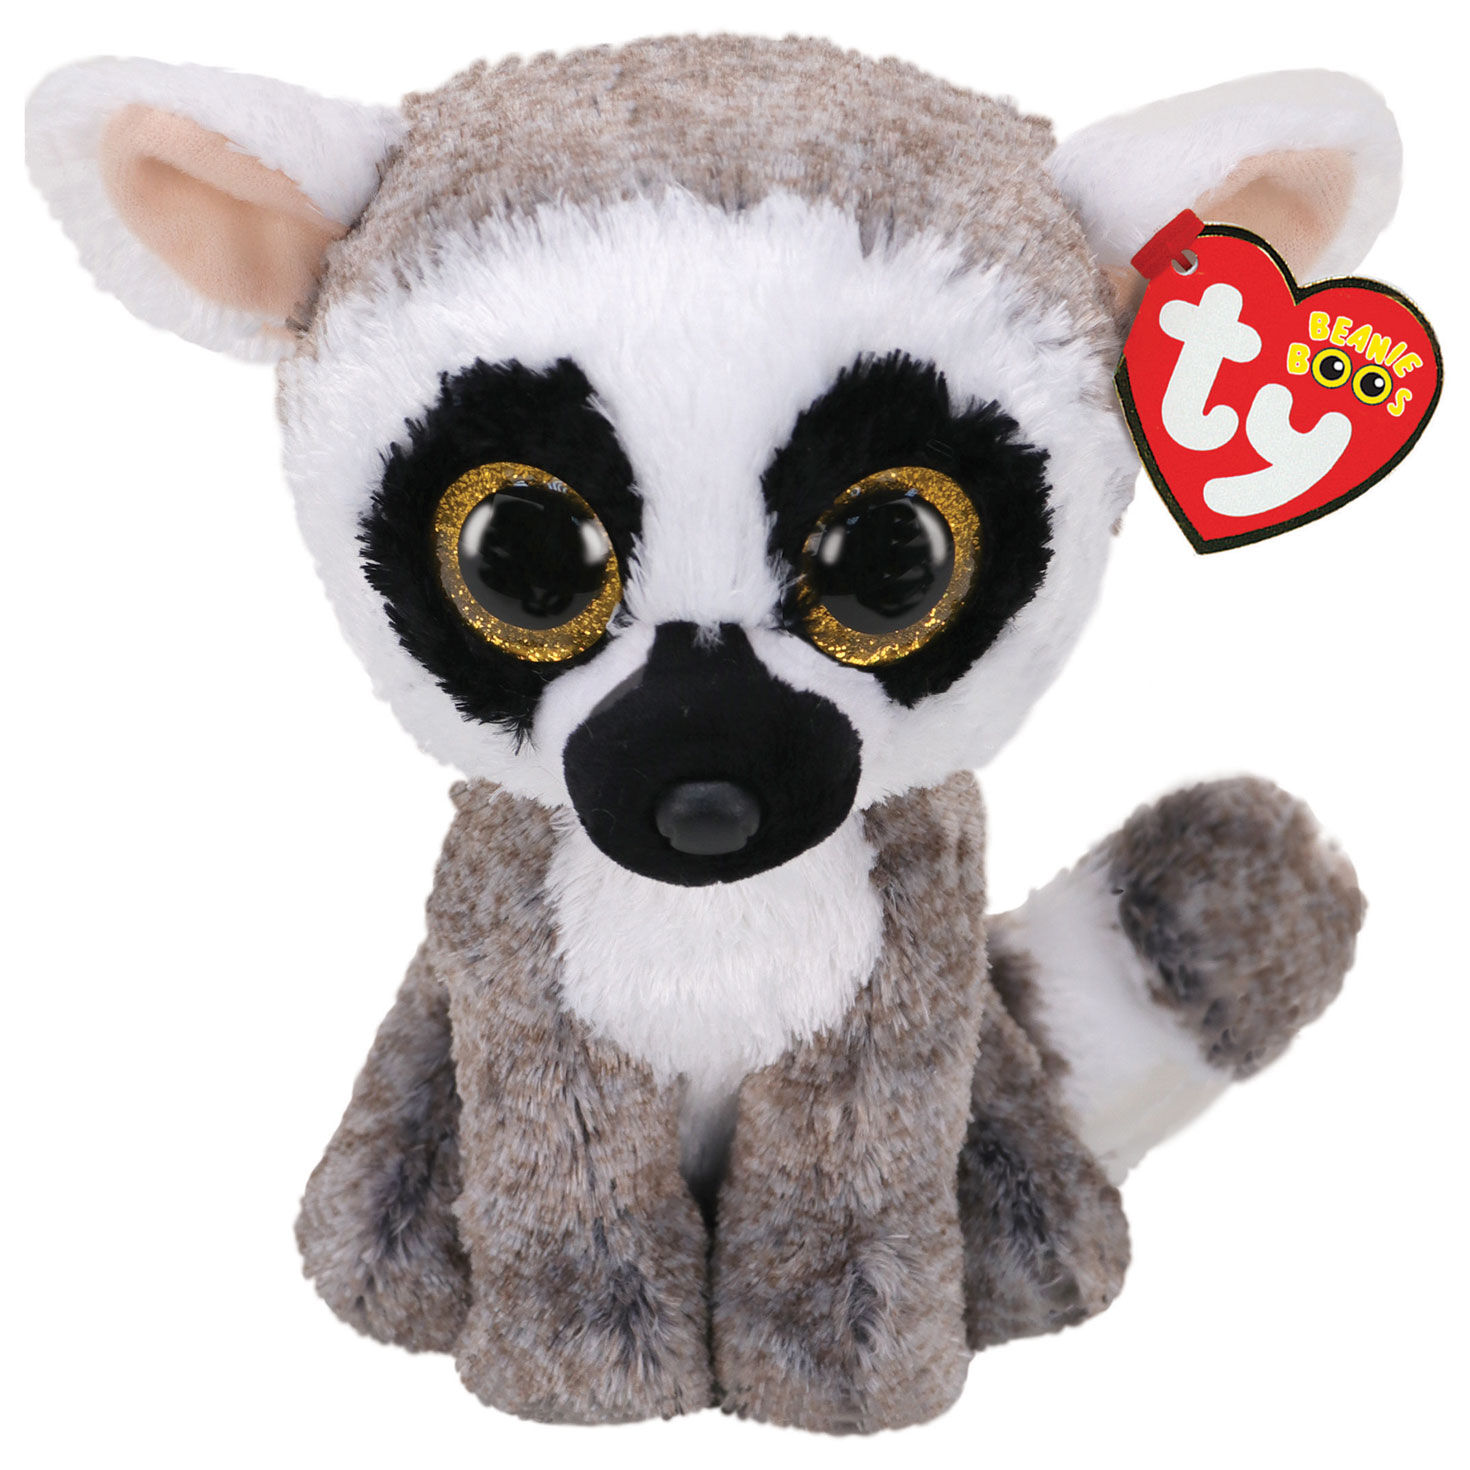 stuffed lemur